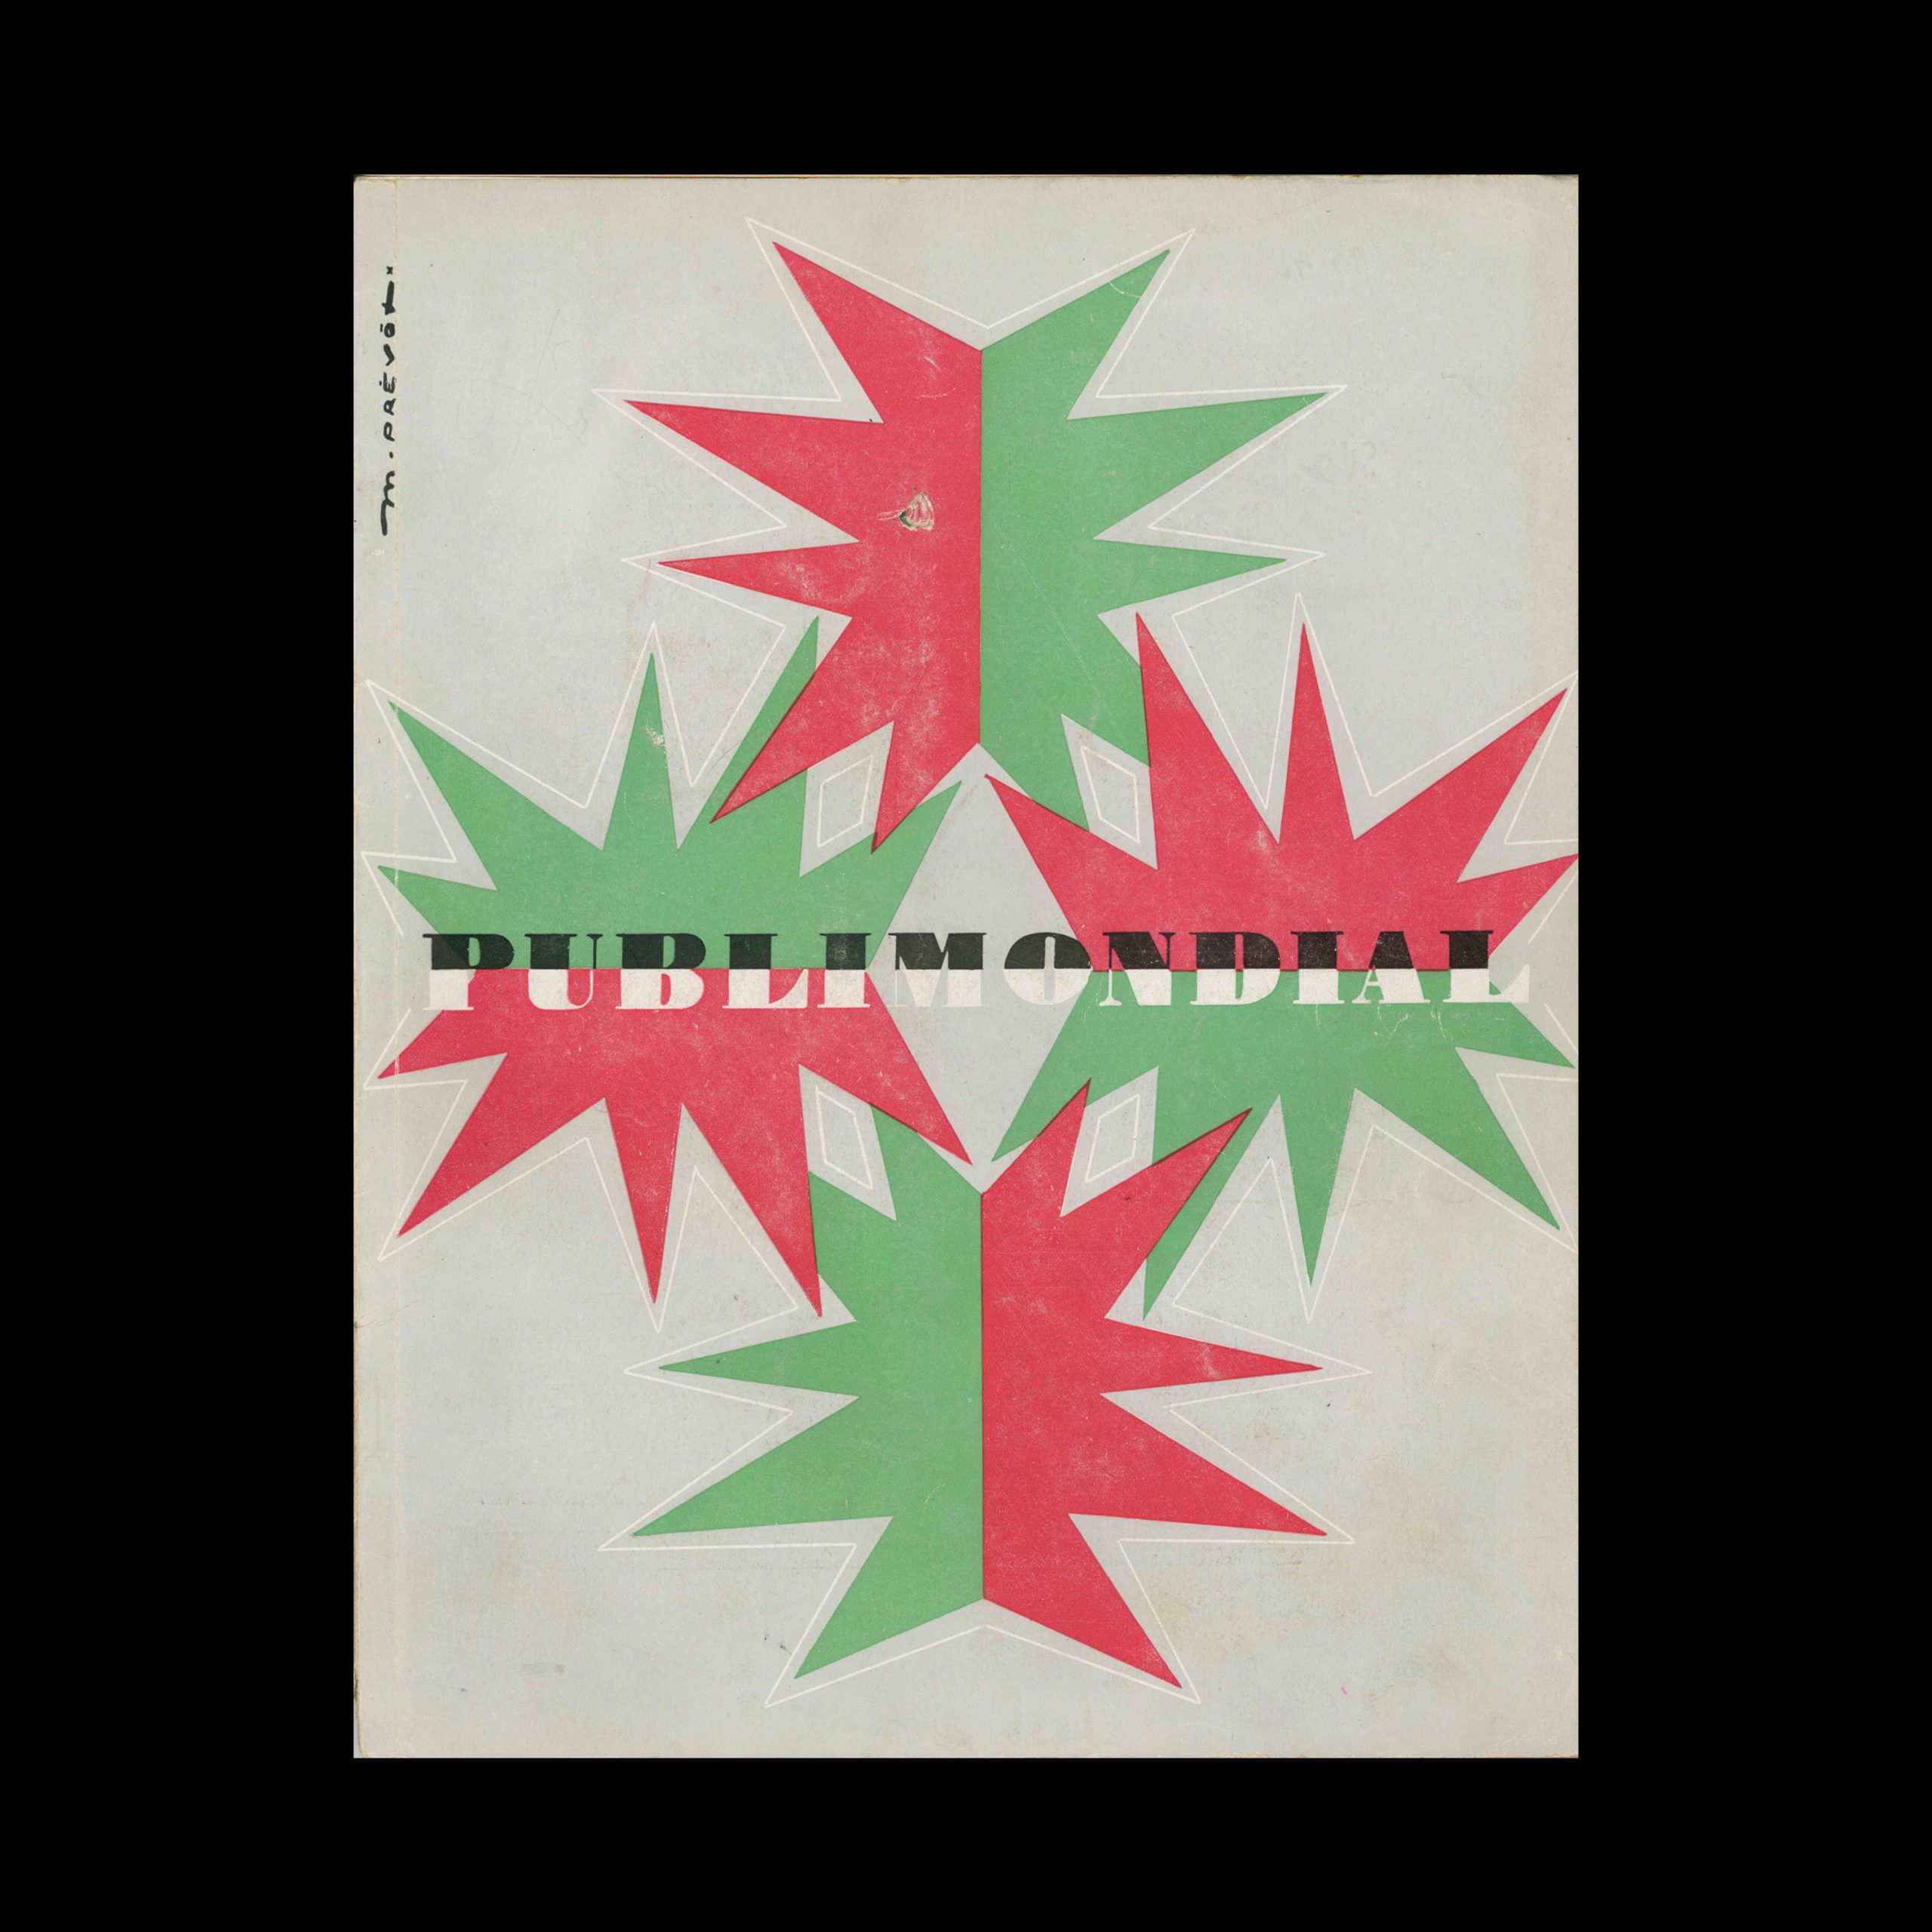 Publimondial 21, 1949. Cover design by Madeleine Prévôt.